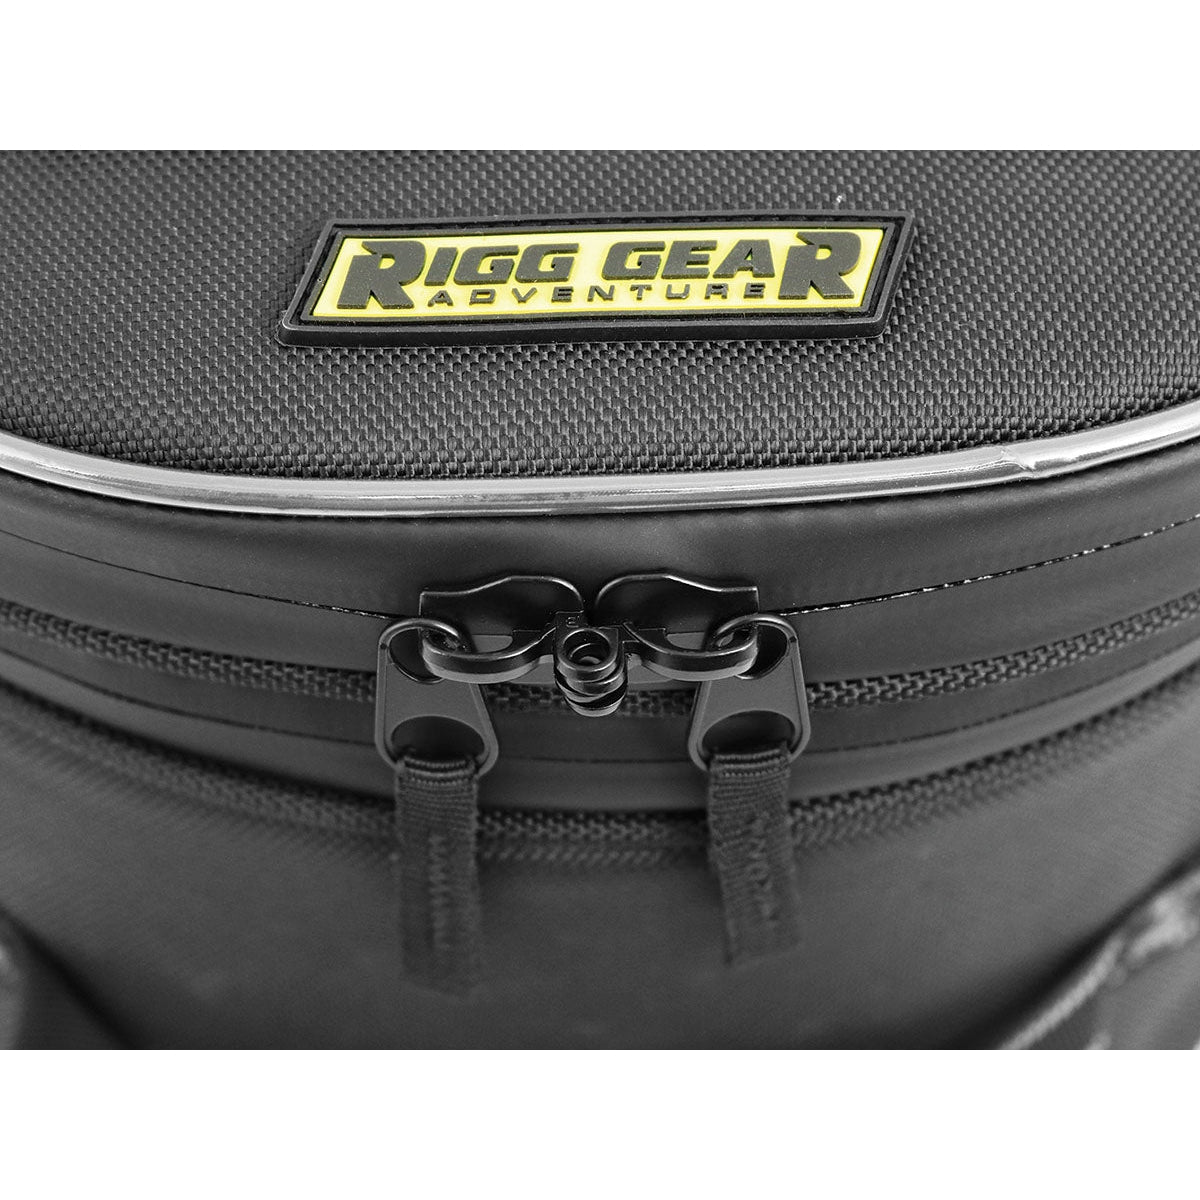 Rigg Gear Adventure RG-1055 Trails End Adventure Tail Bag